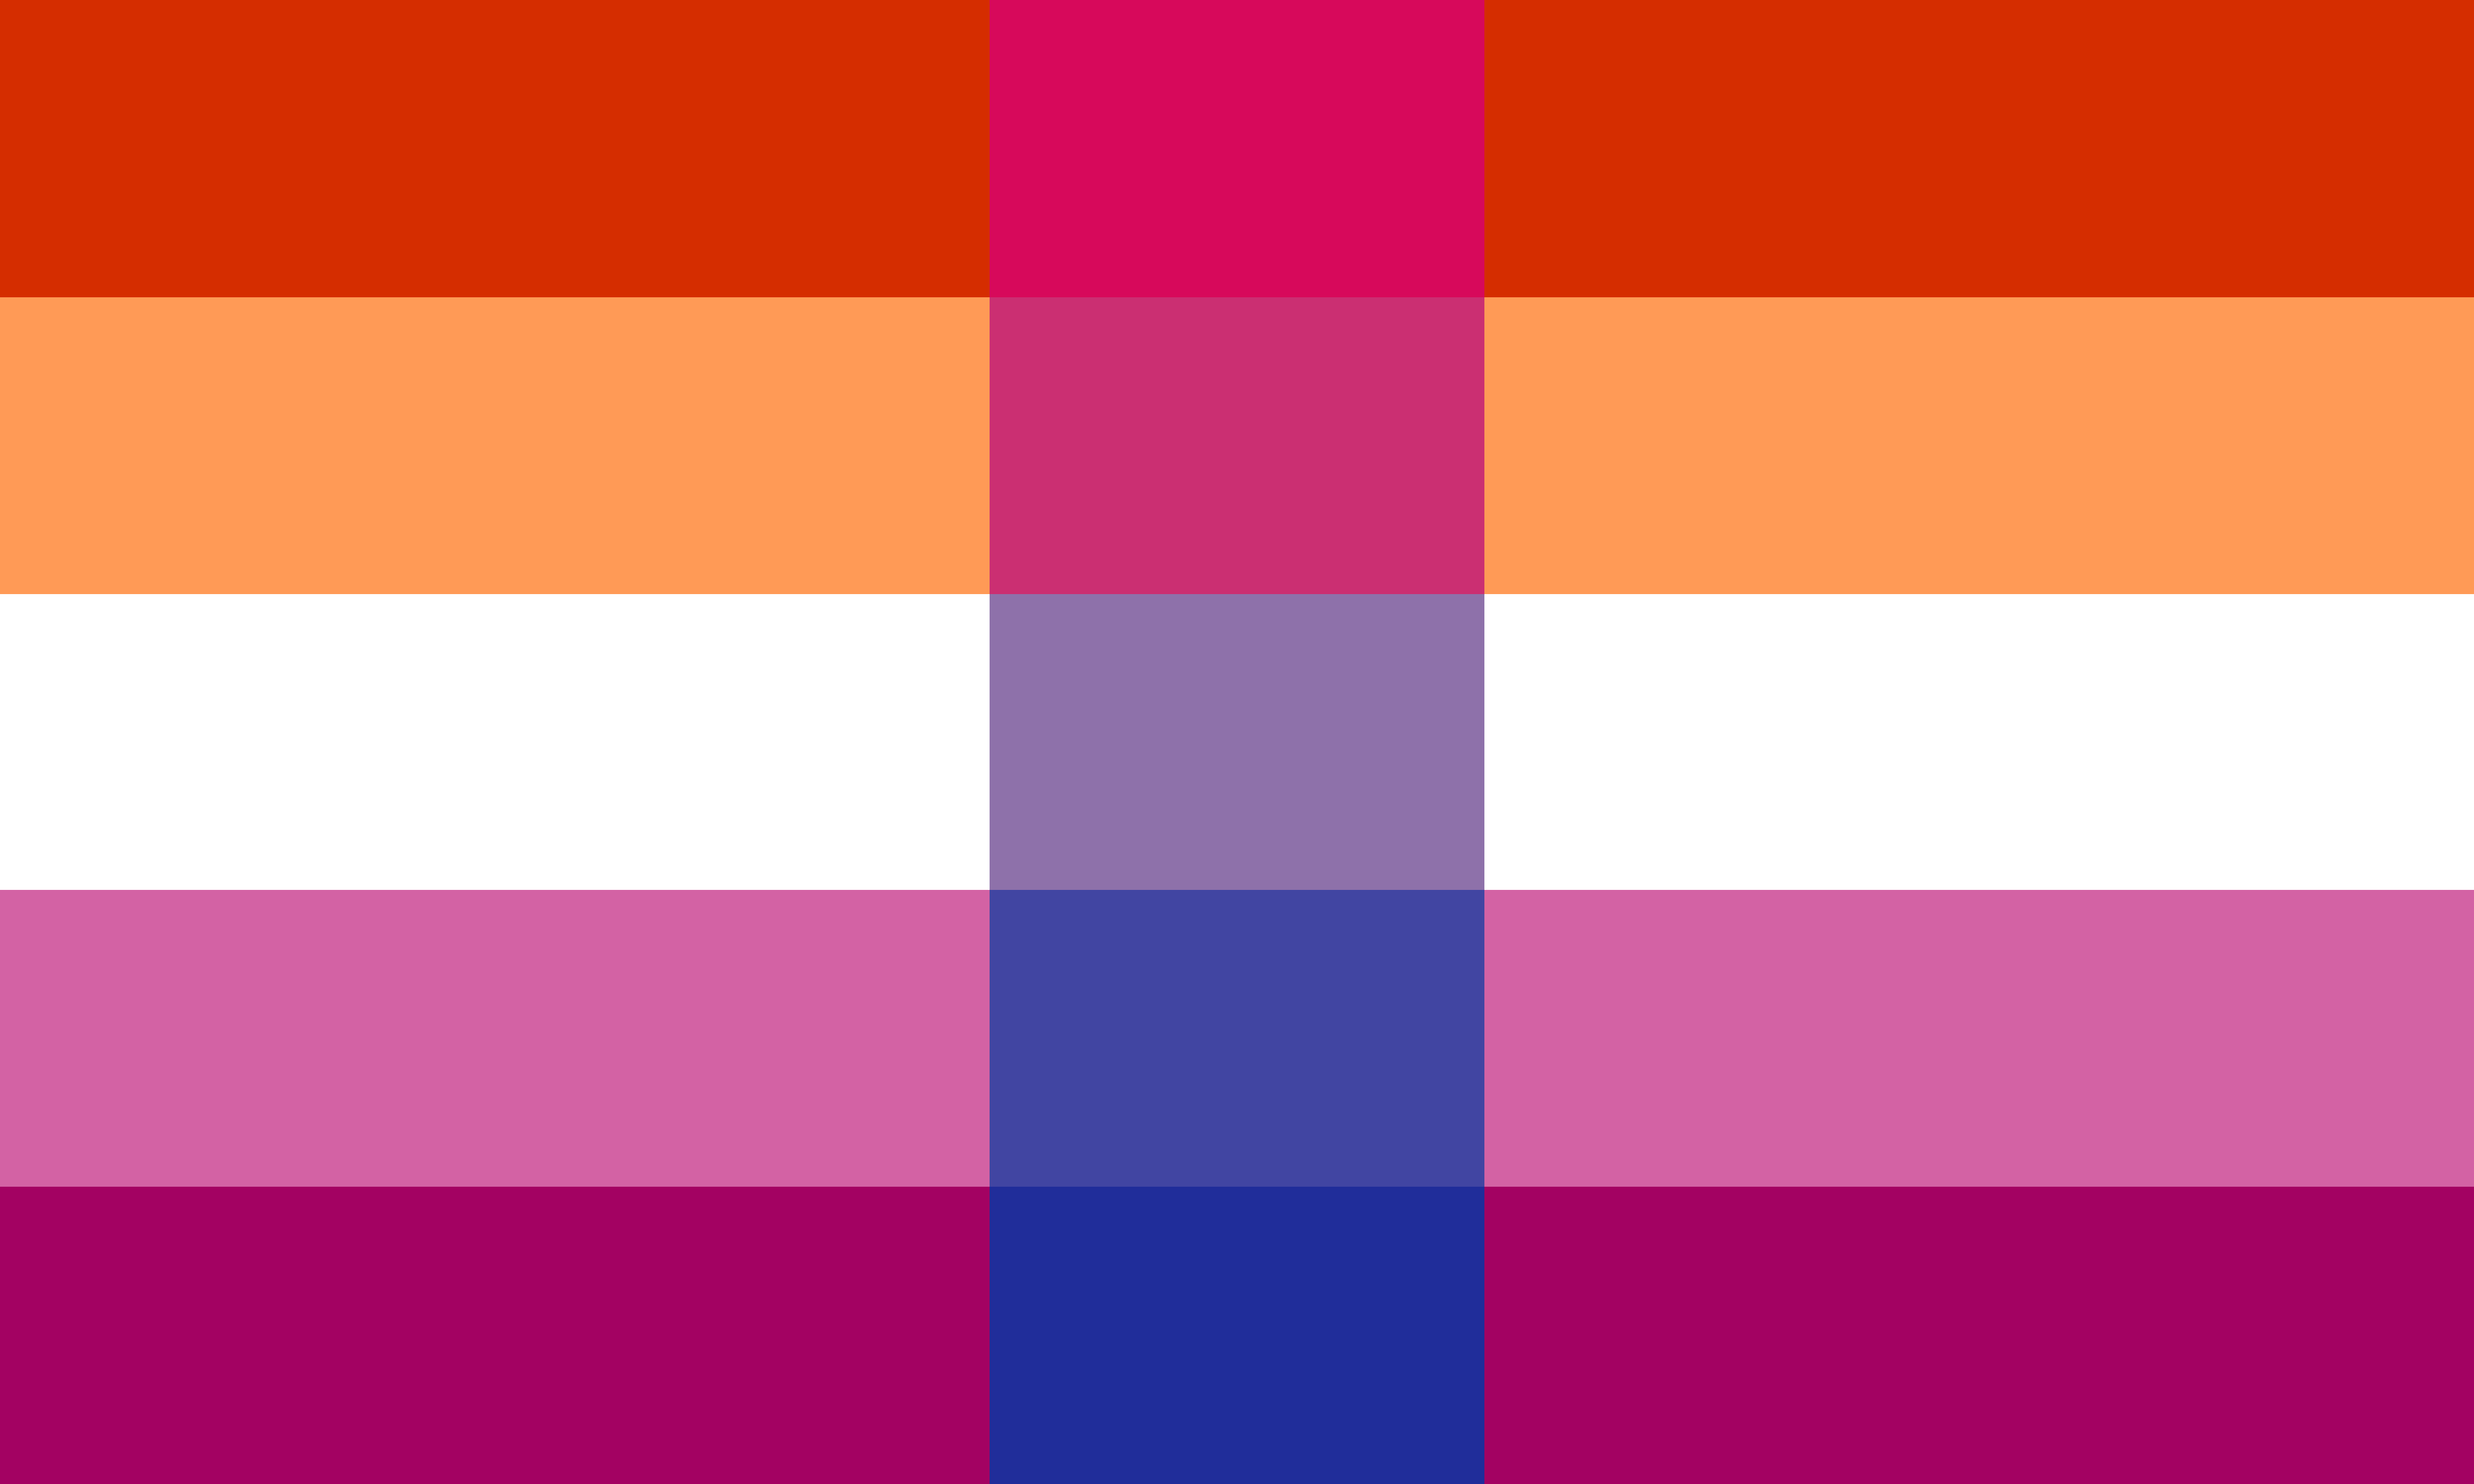 Homoflexible Lesbian 3 By Pride Flags On Deviantart